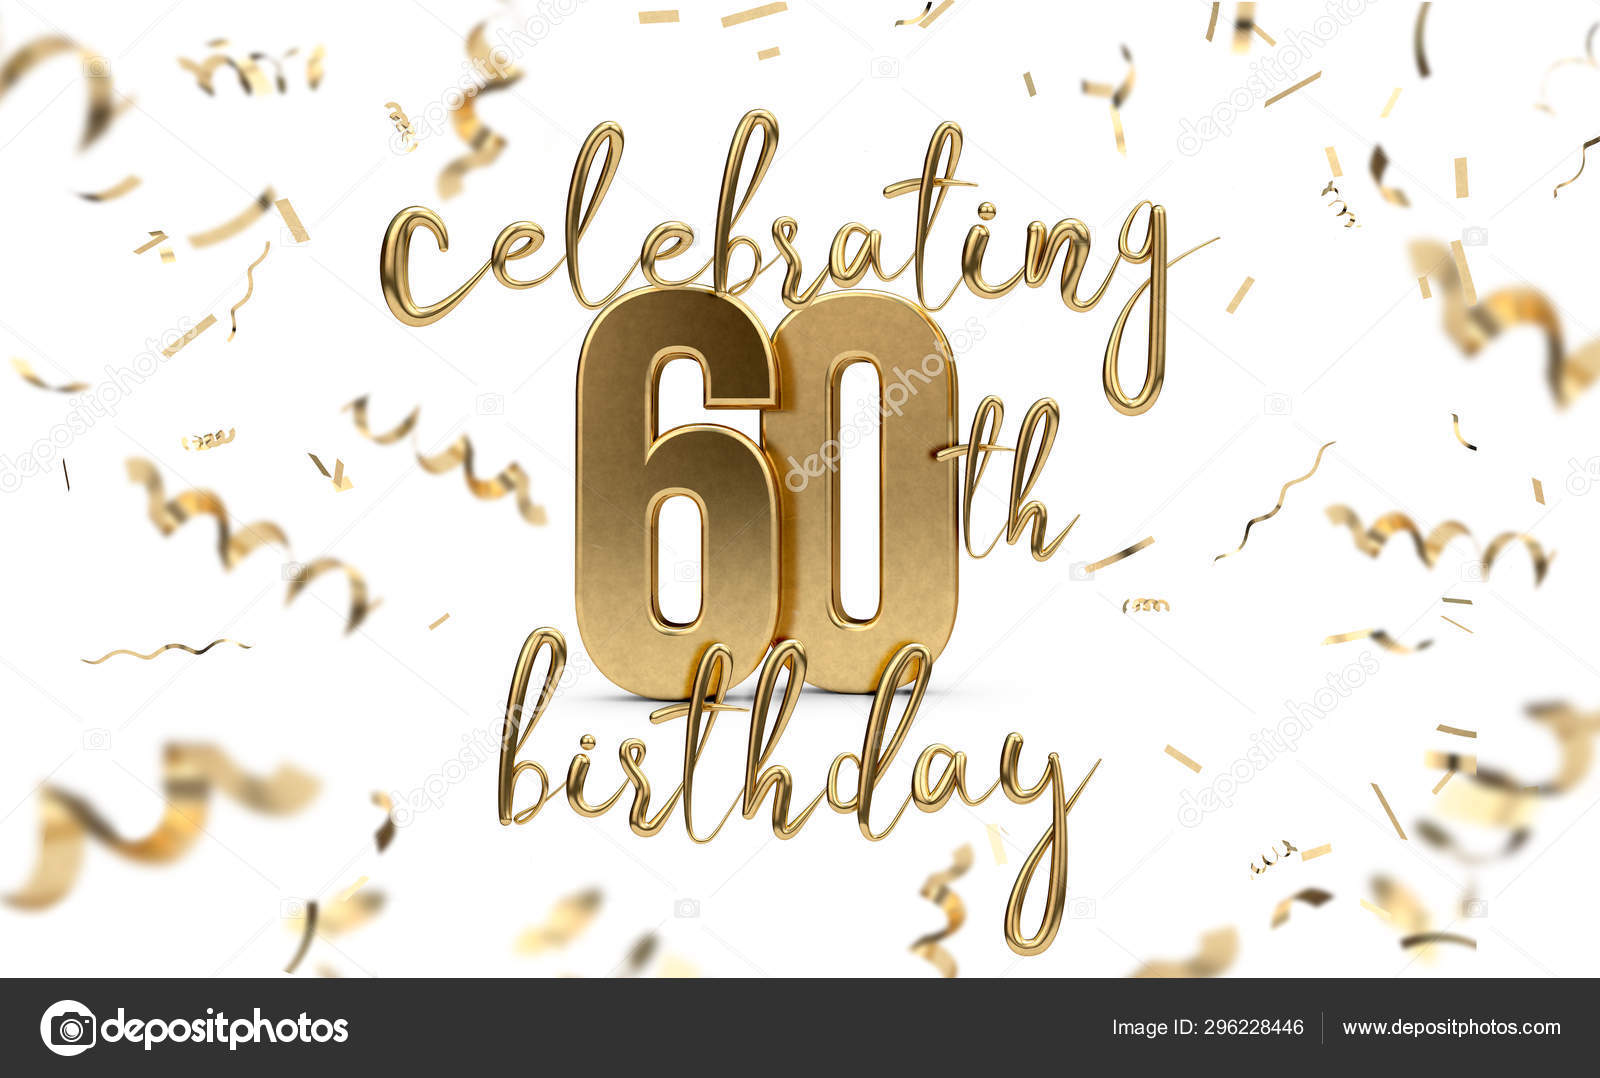 60th birthday background Stock Photos, Royalty Free 60th birthday background  Images | Depositphotos